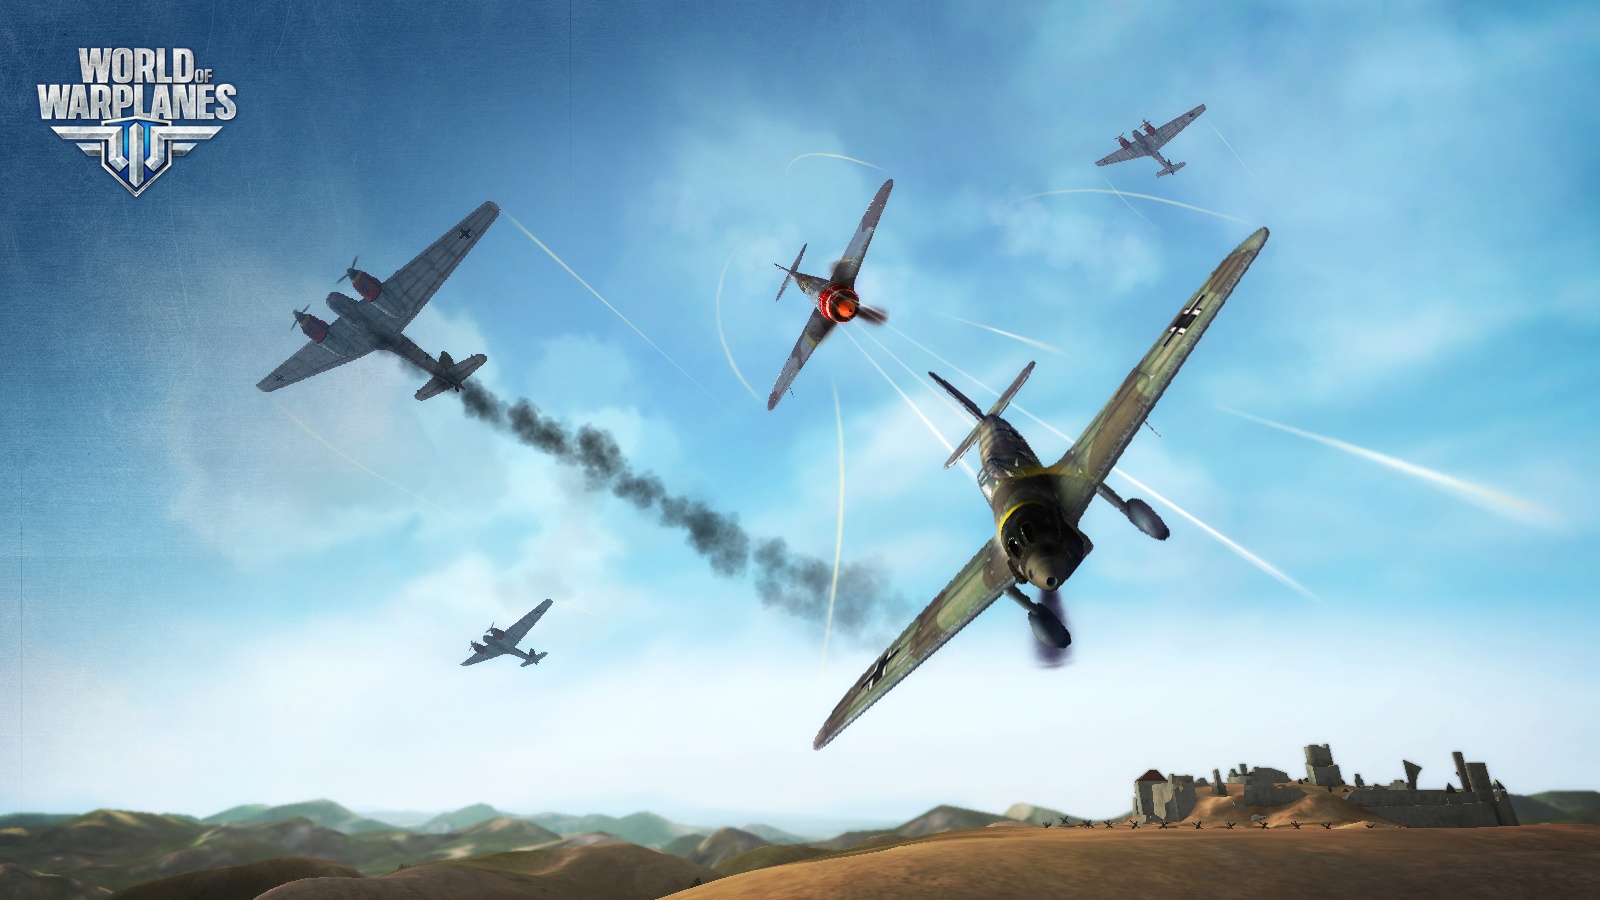 World of War Planes